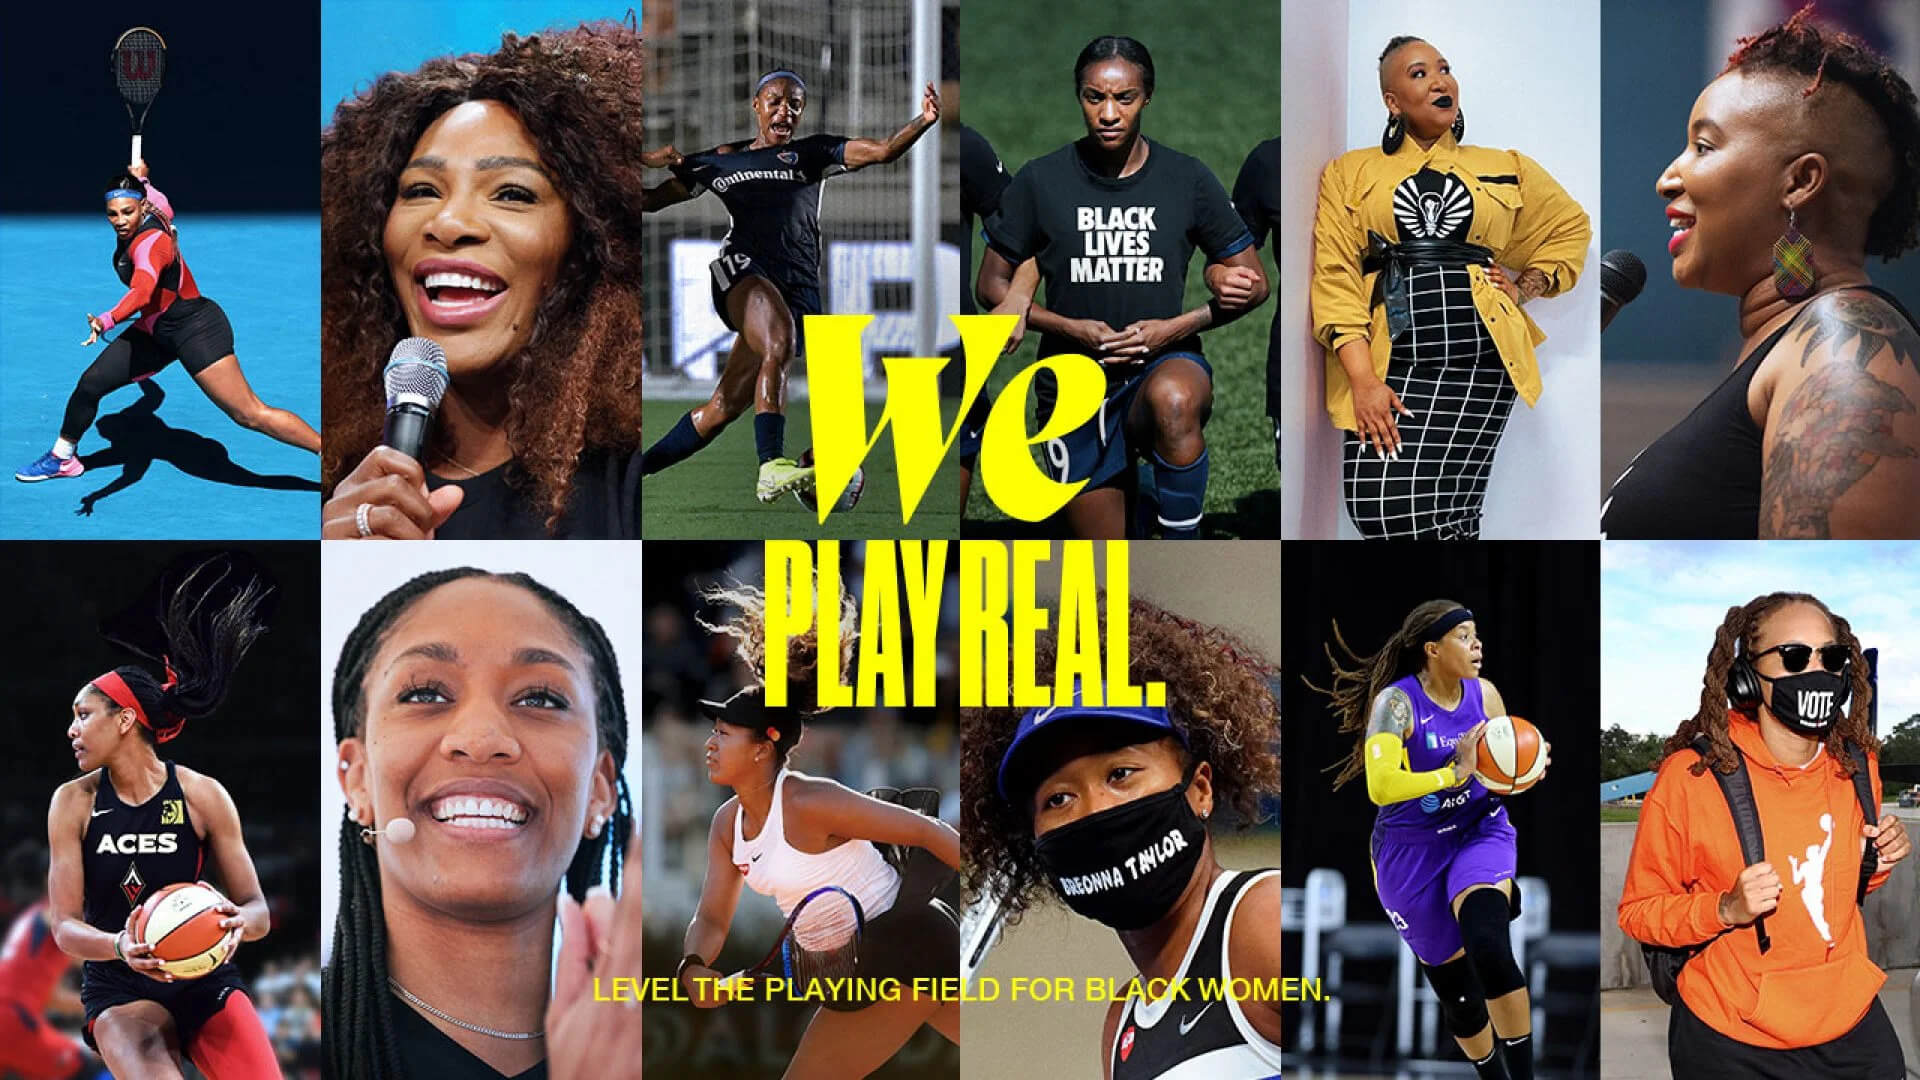 consola saber Ahuyentar We Play Real | Nike celebrating Black women in sports